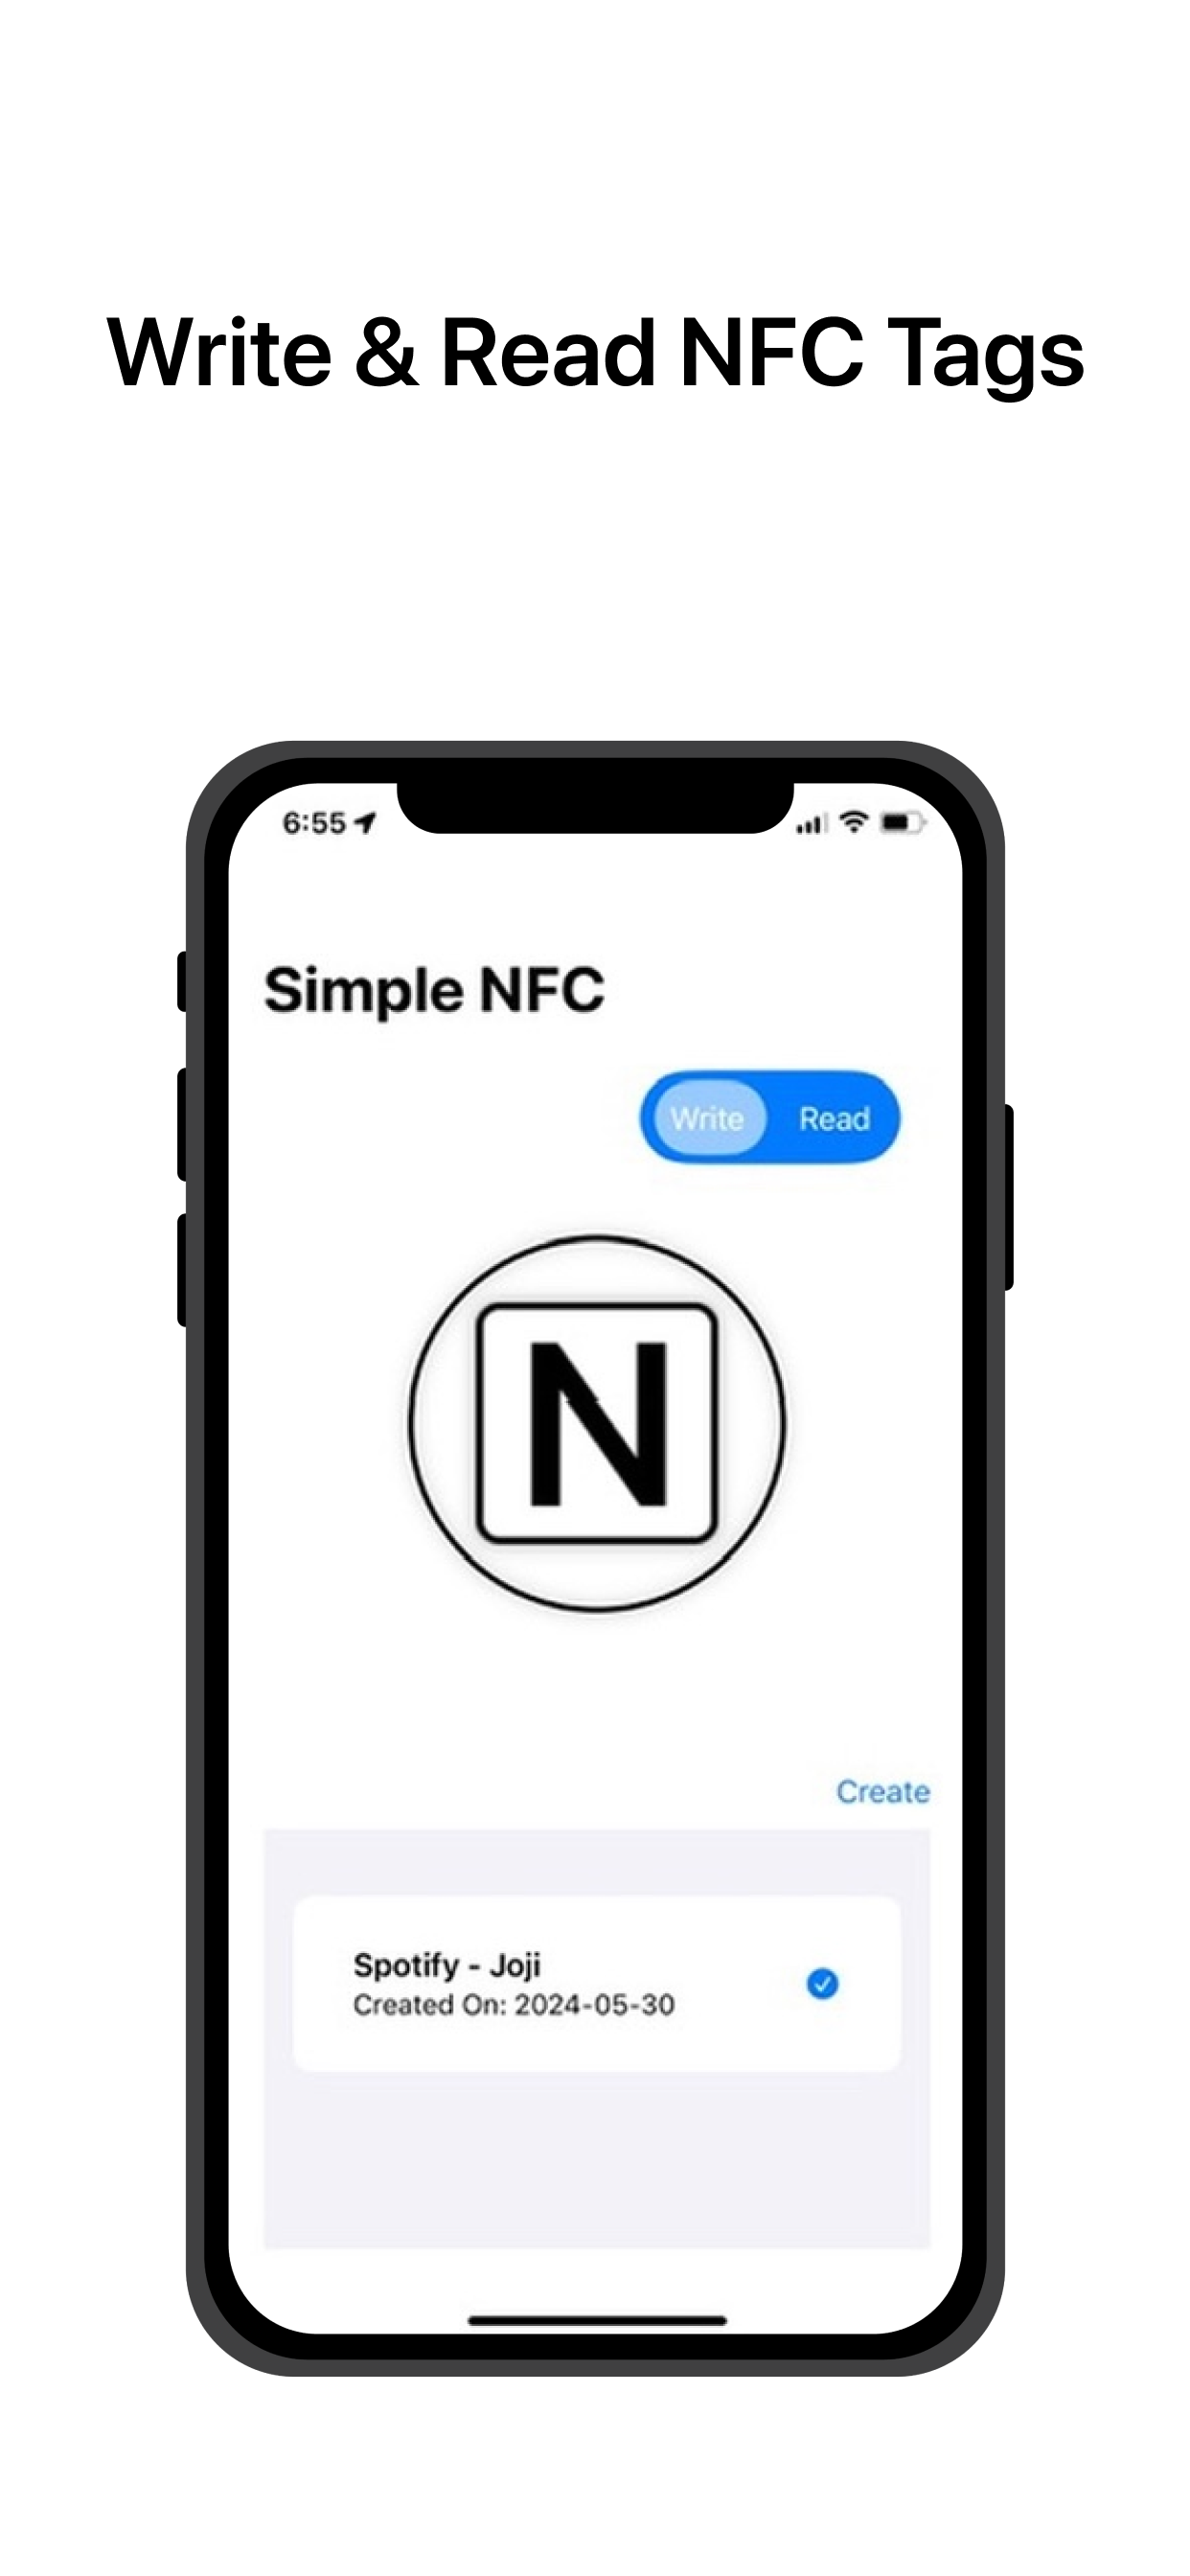 Write & Read NFC Tags